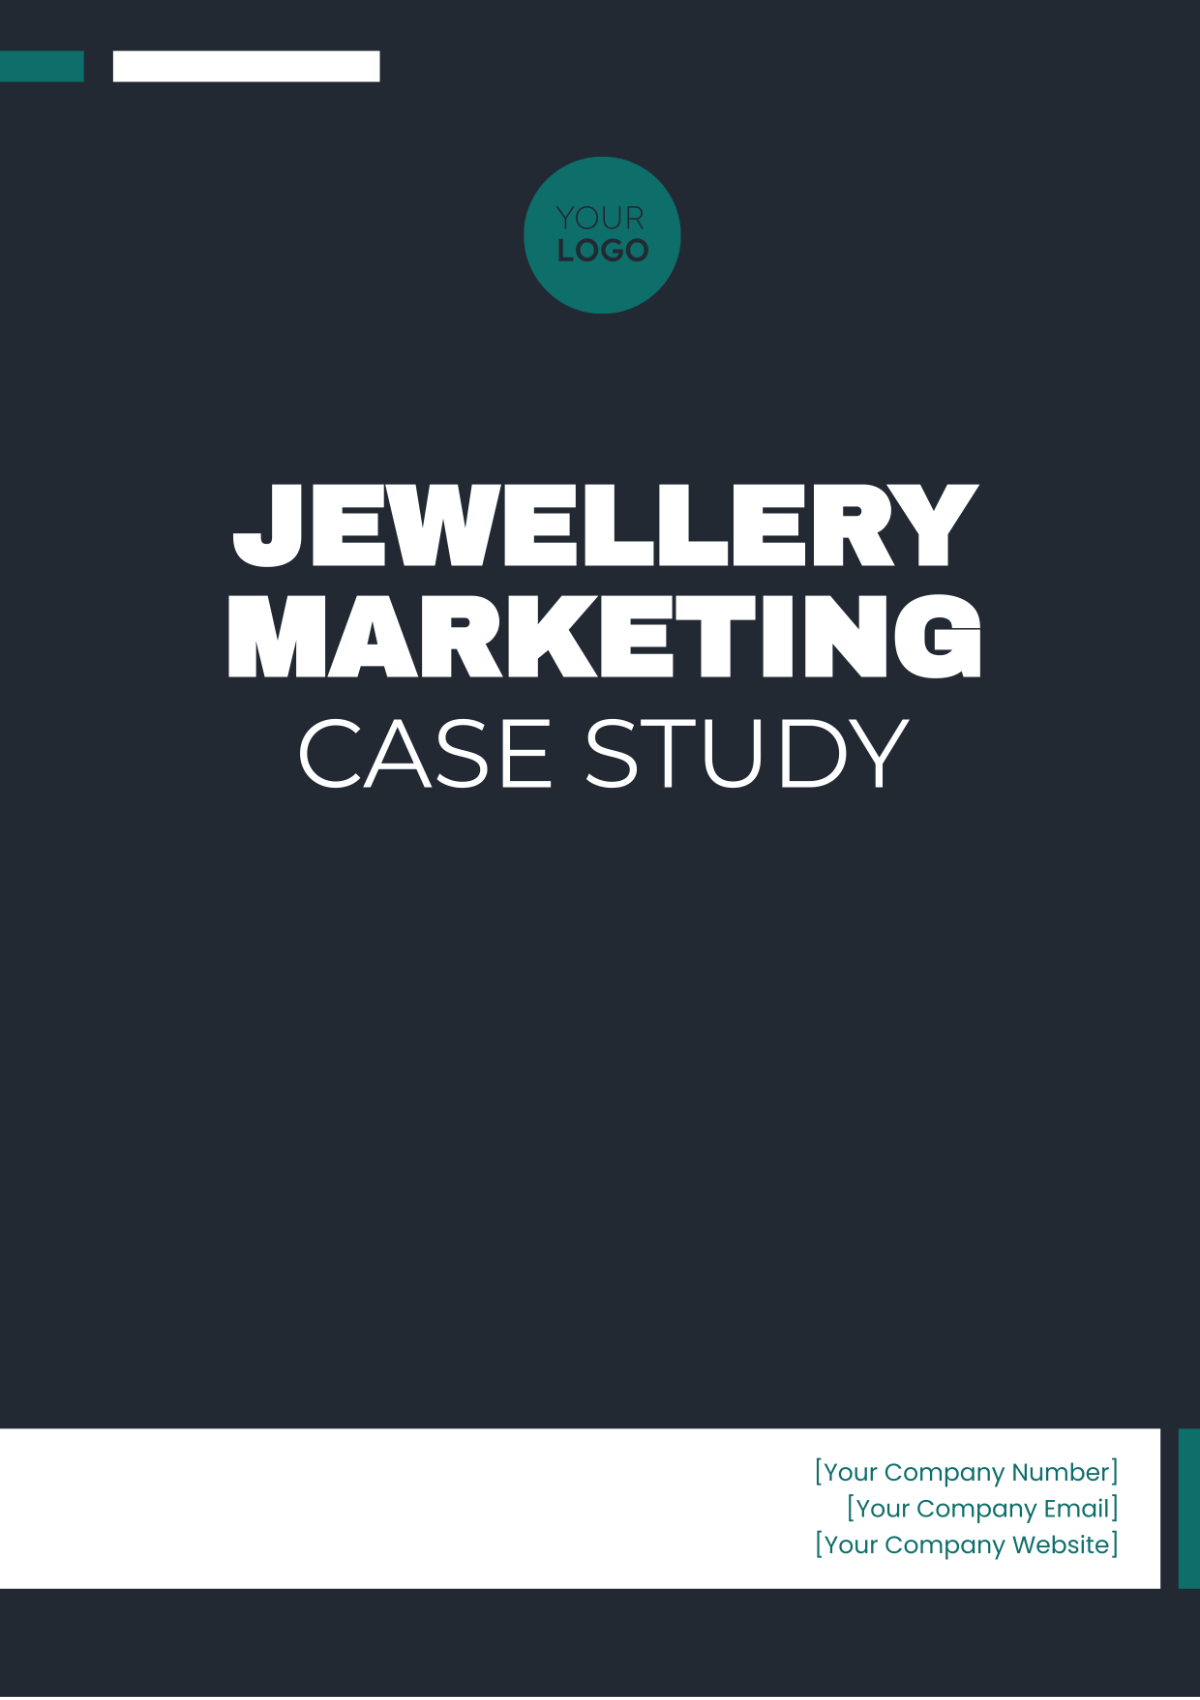 Jewellery Marketing Case Study Template